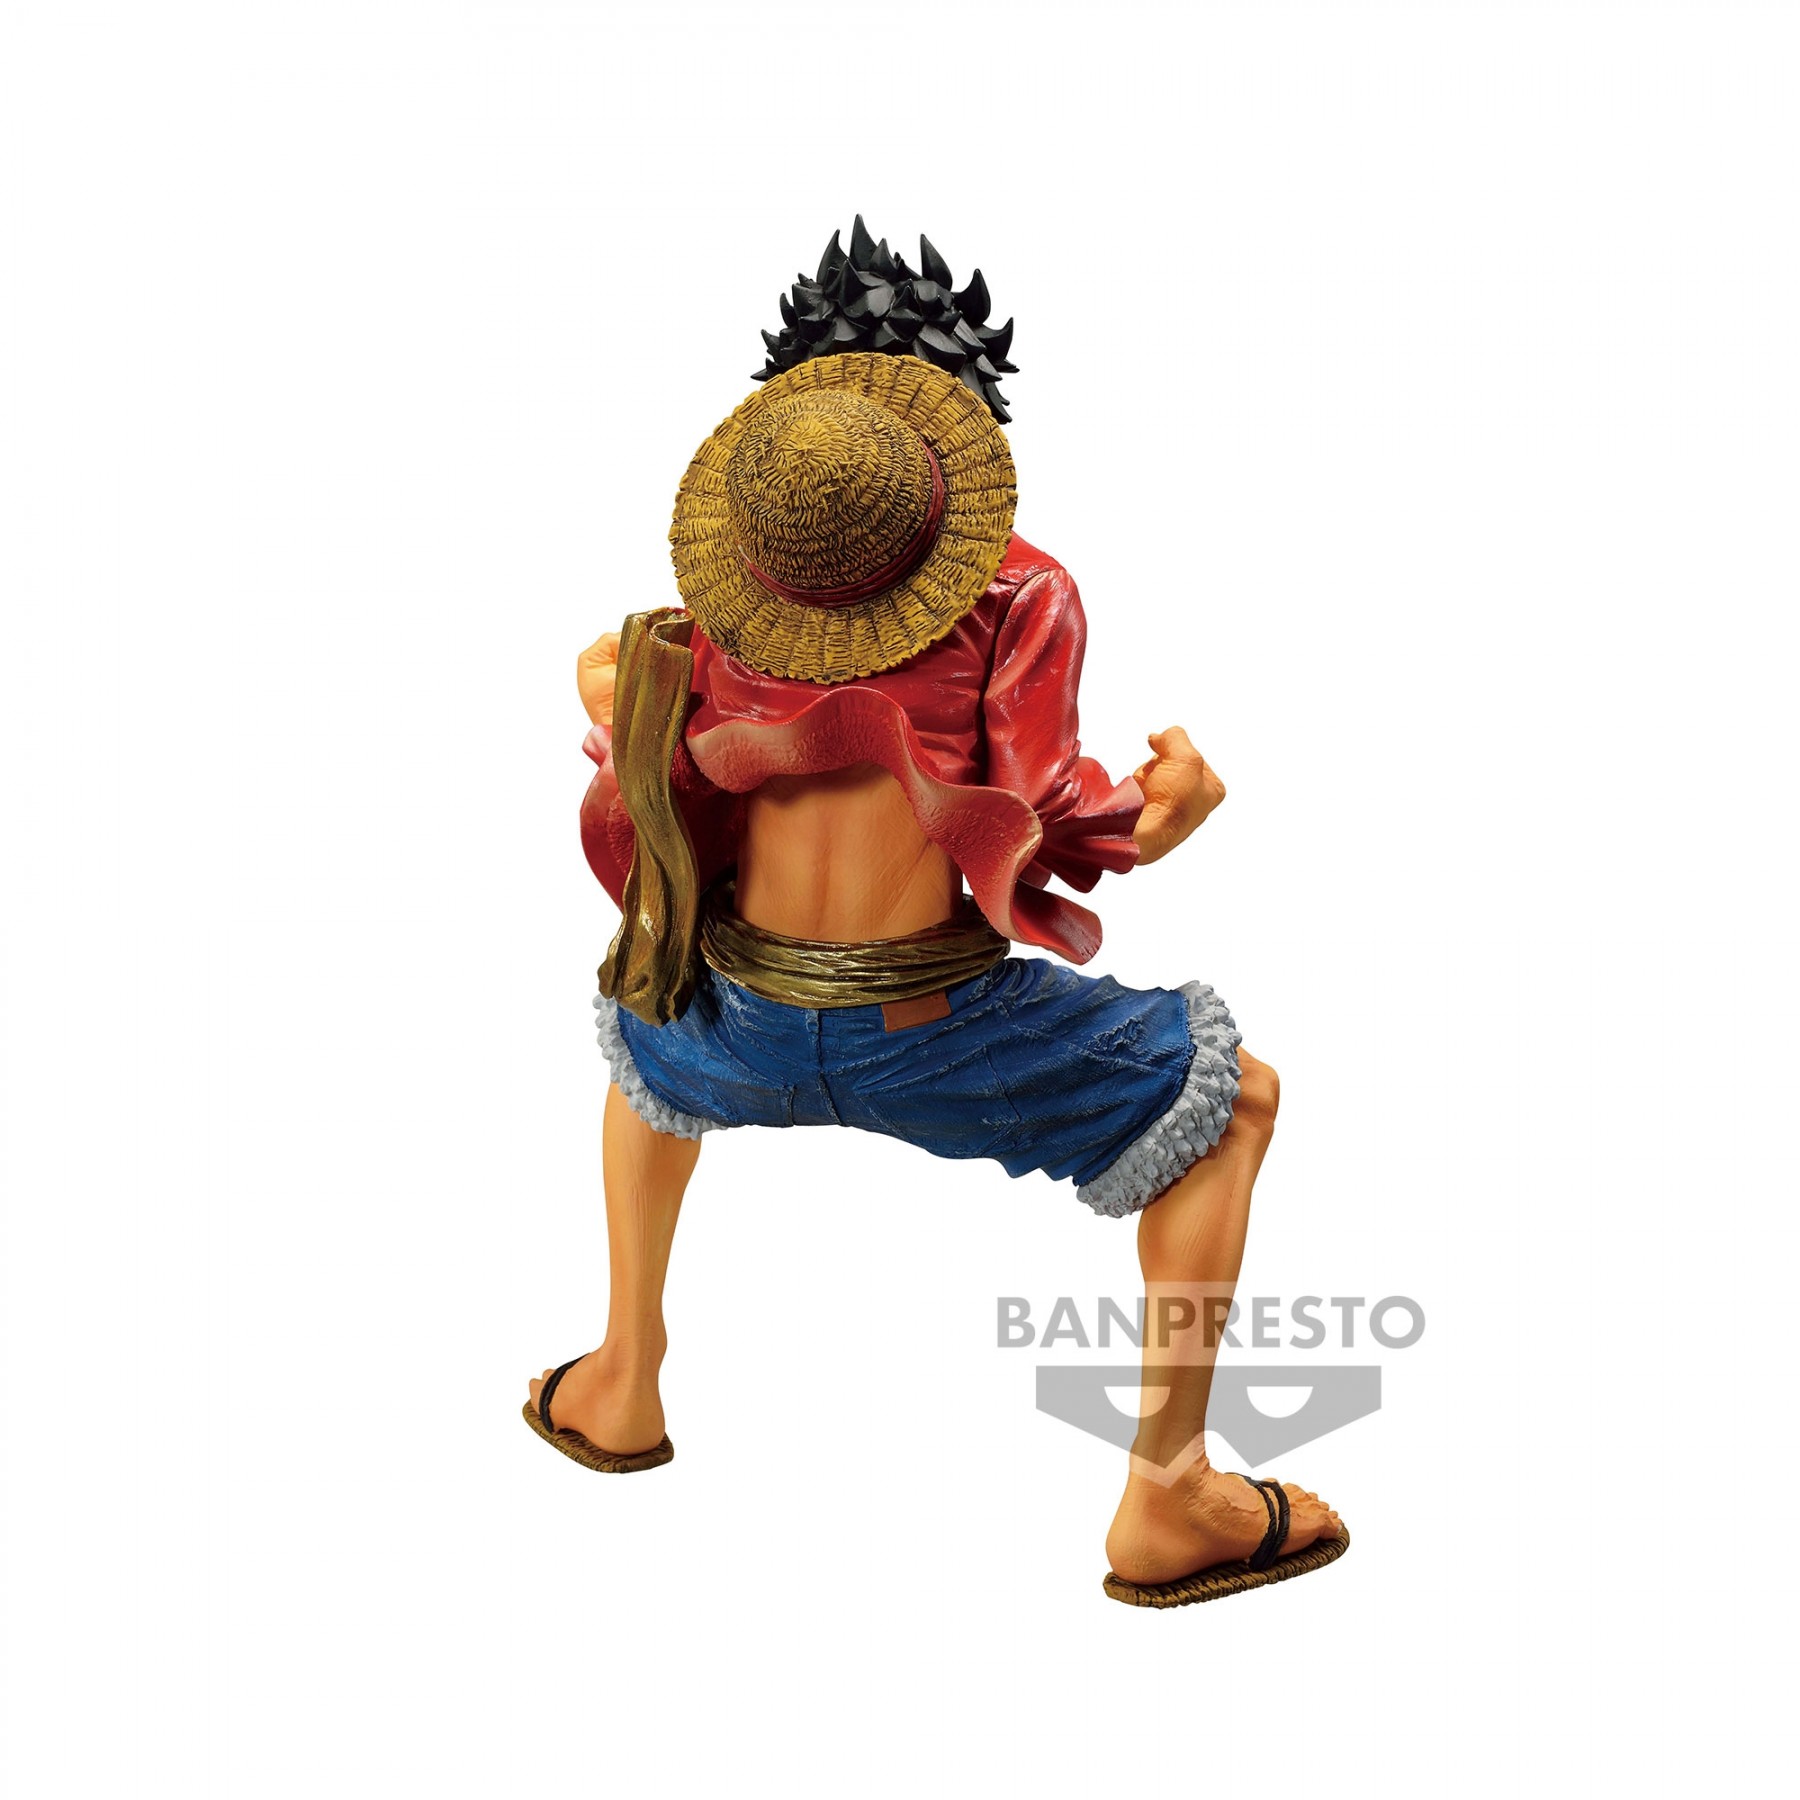 BP18972P Banpresto One Piece Figure Banpresto Chronicle King of 